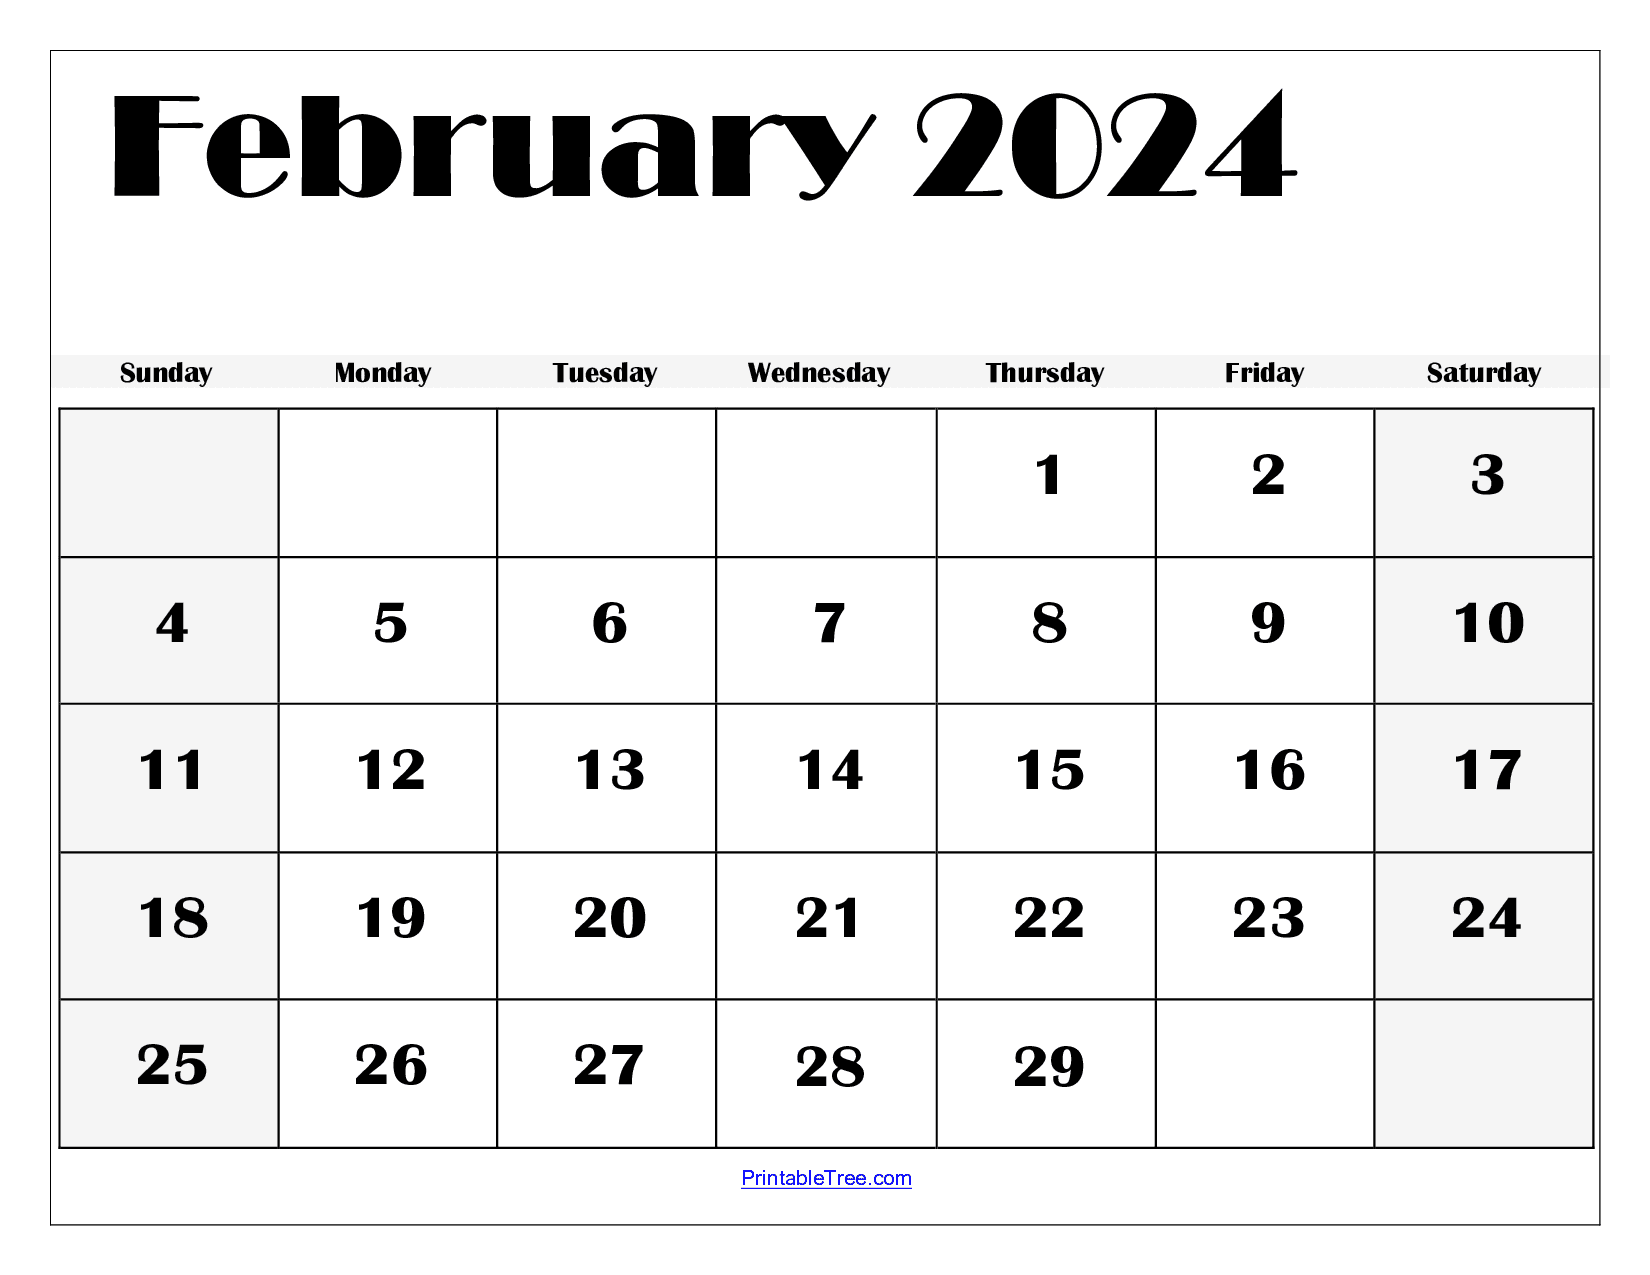 February 2024 Calendar Large Print Lula Sindee - Free Printable Blank Calendar February 2024